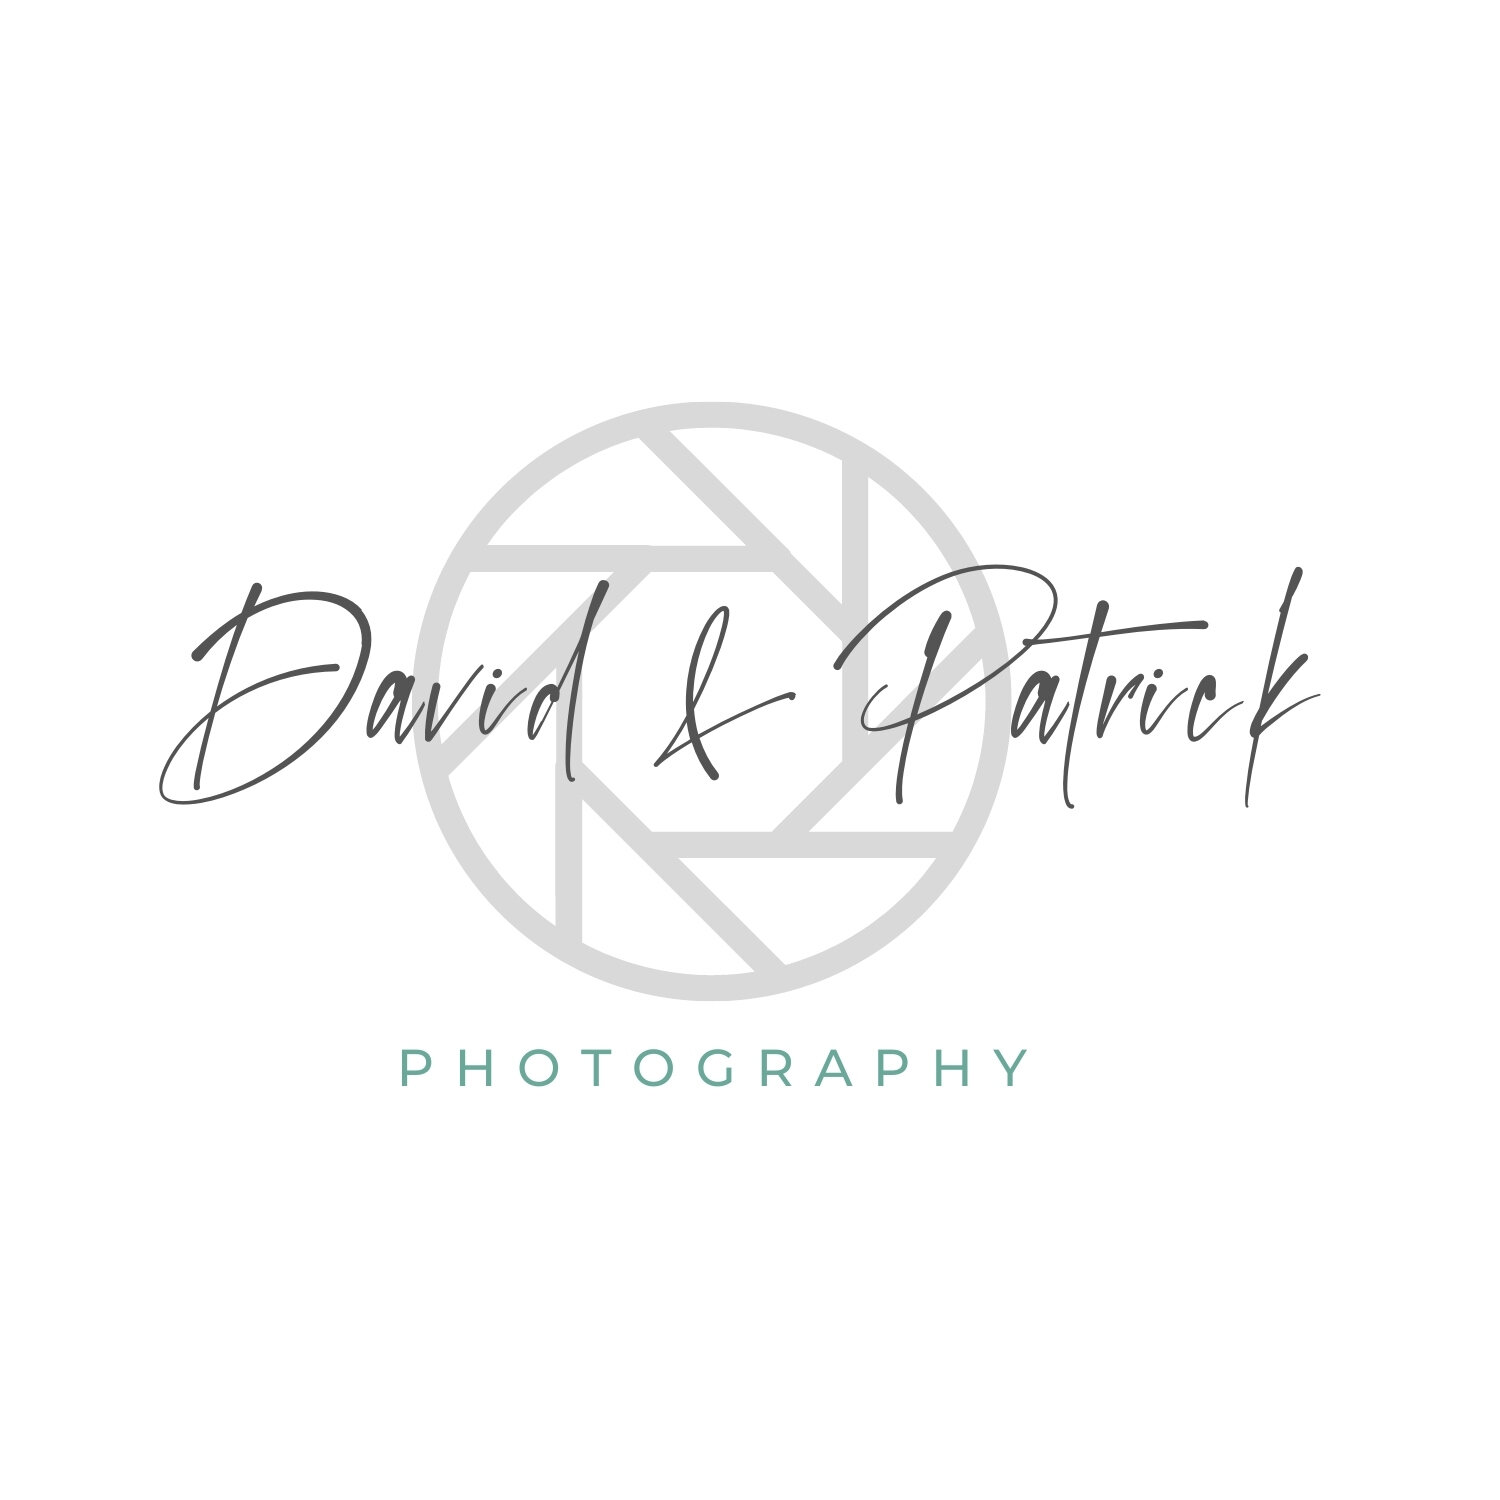 David &amp; Patrick Photography